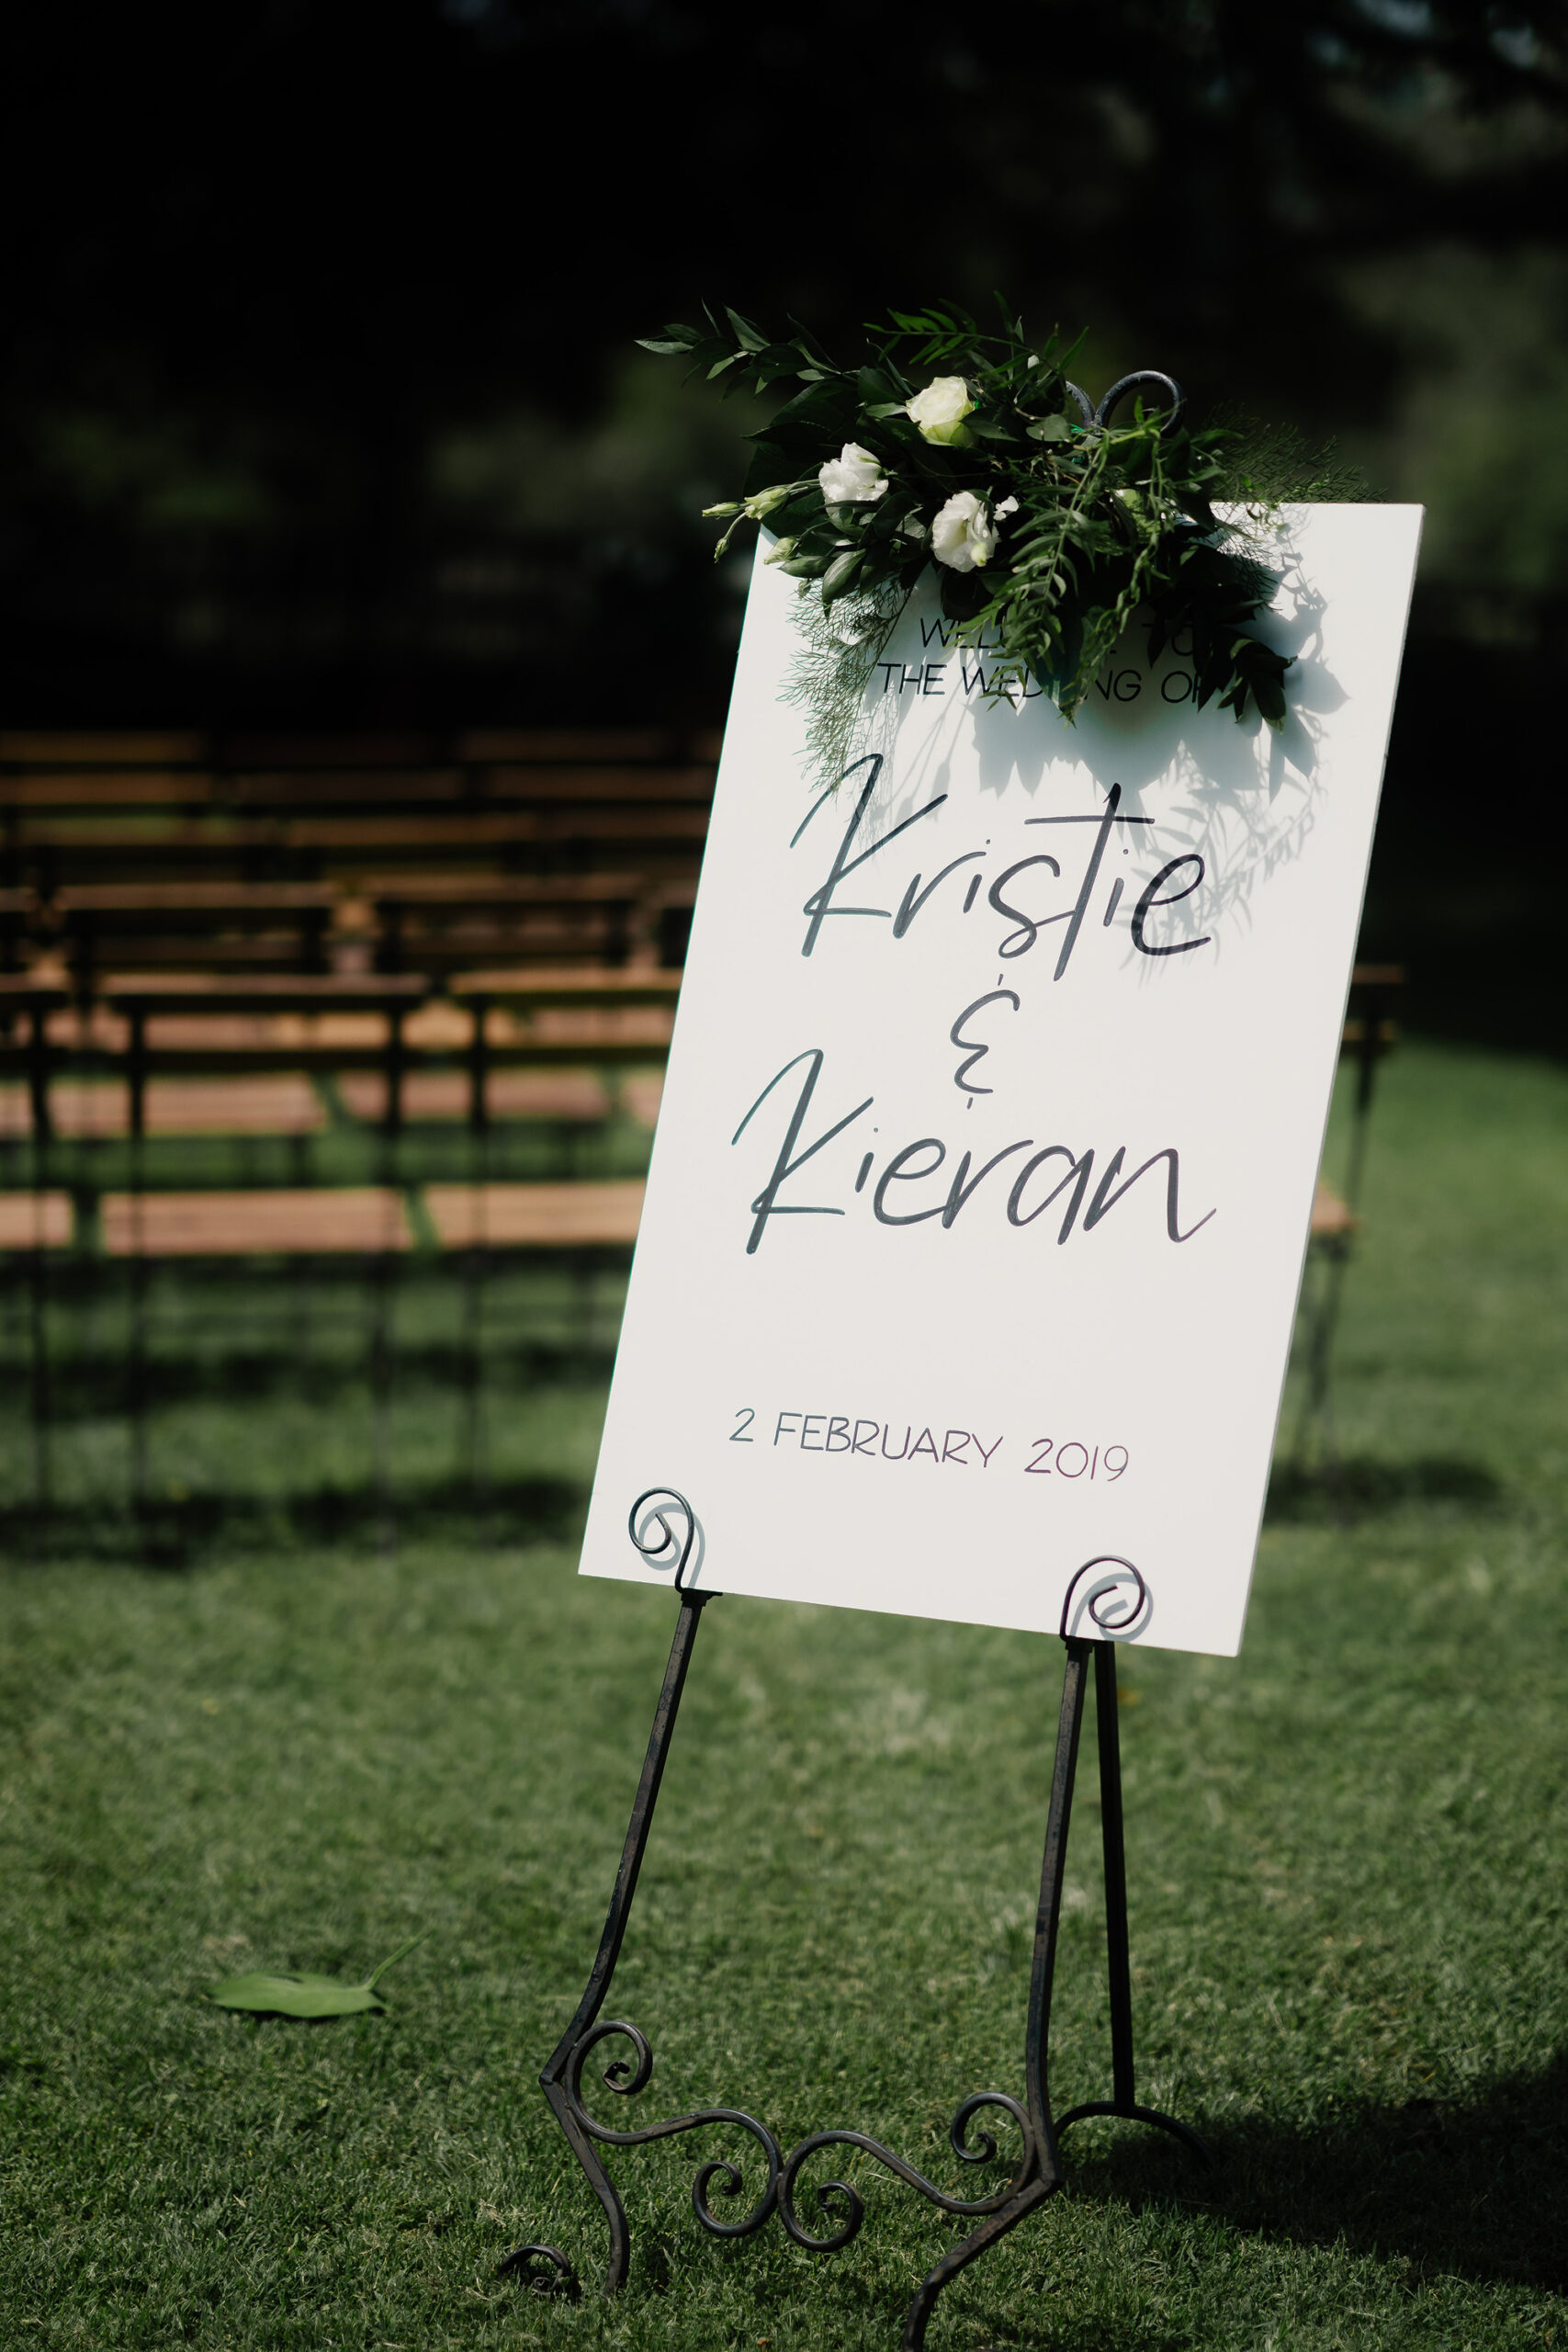 Kristie Kieran Formal Wedding Ben Howland SBS 013 scaled